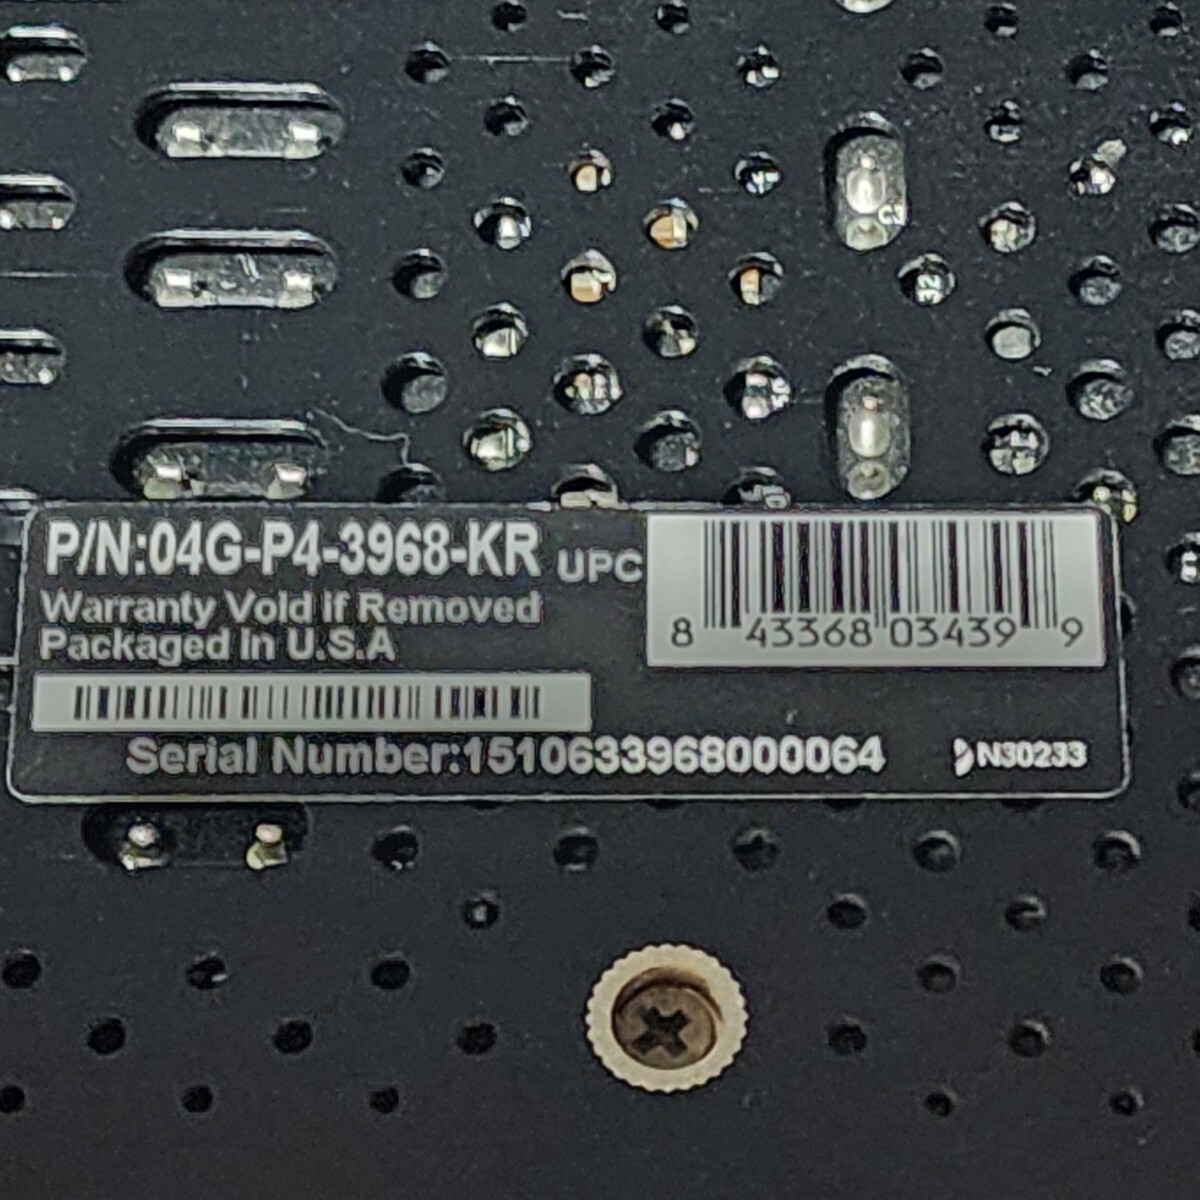 EVGA GEFORCE GTX960 FTW 4GB GDDR5/04G-P4-3968-KR 動作確認済み PCパーツ グラフィックカード PCIExpress